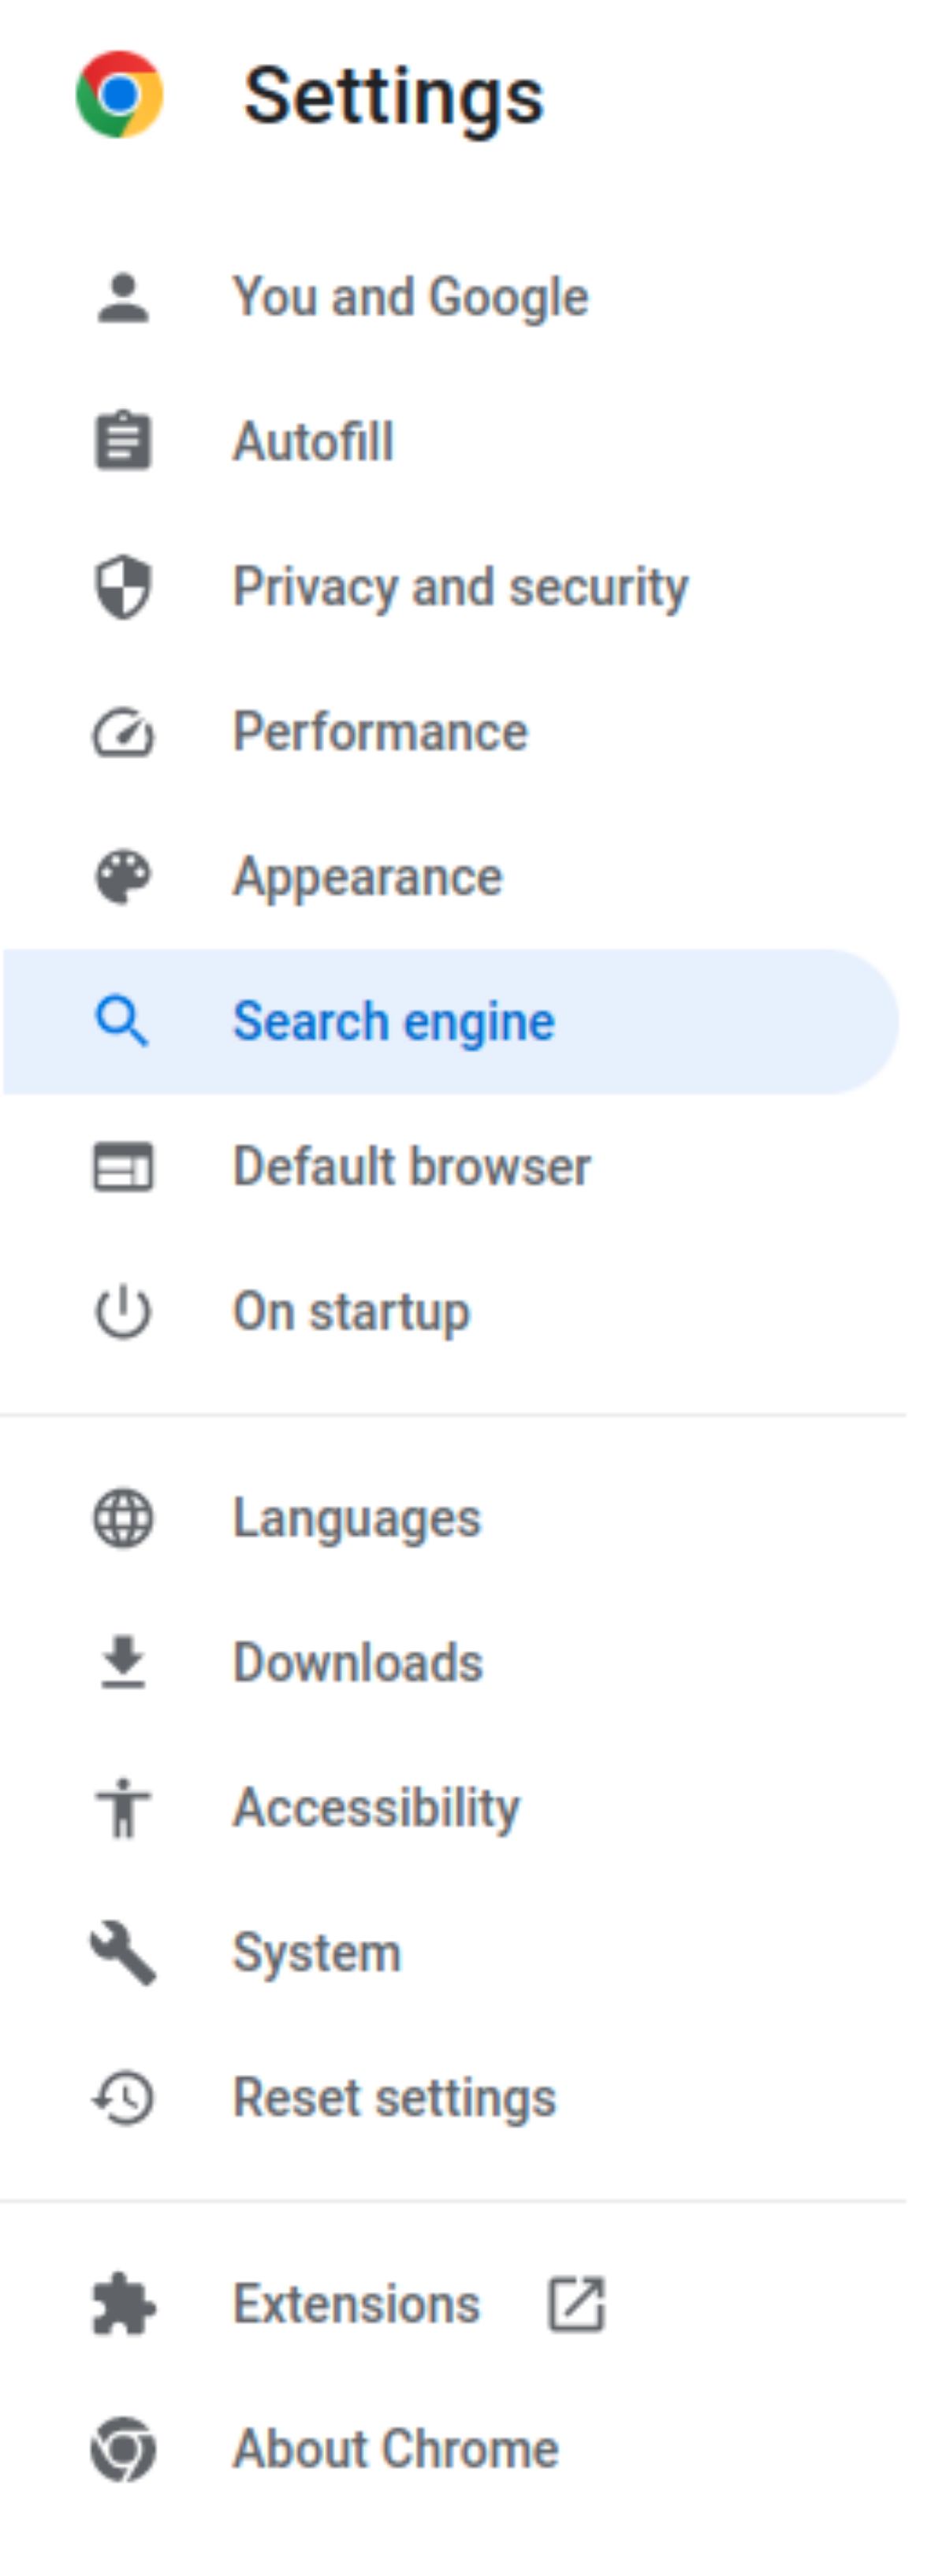 Chrome Settings > Search engine